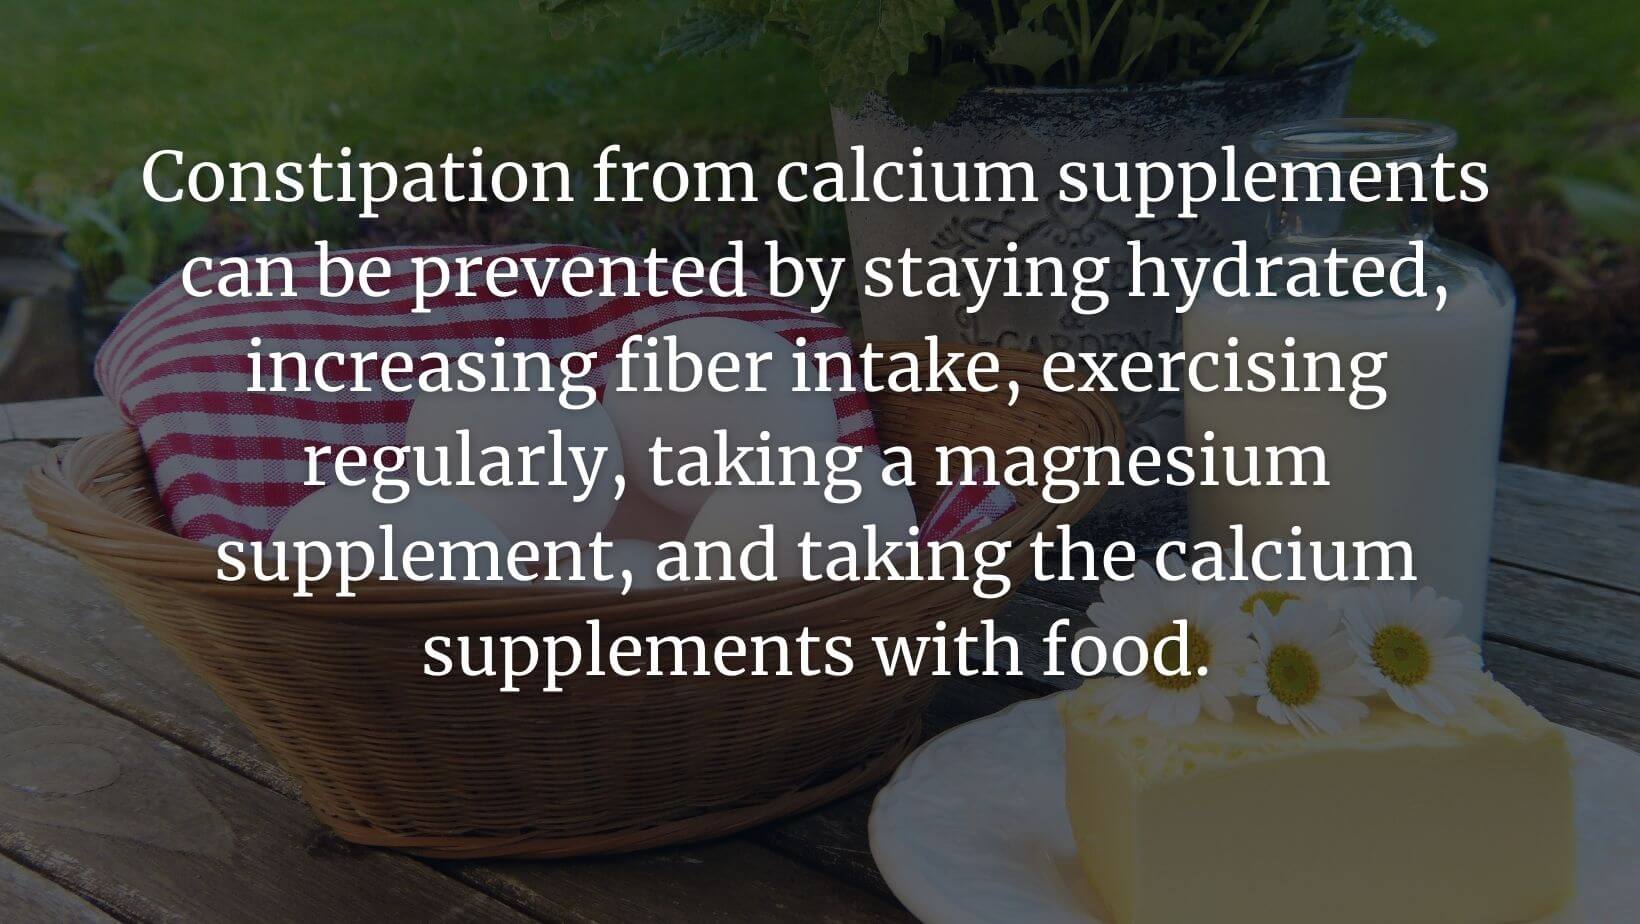 calcium supplement constipation prevention